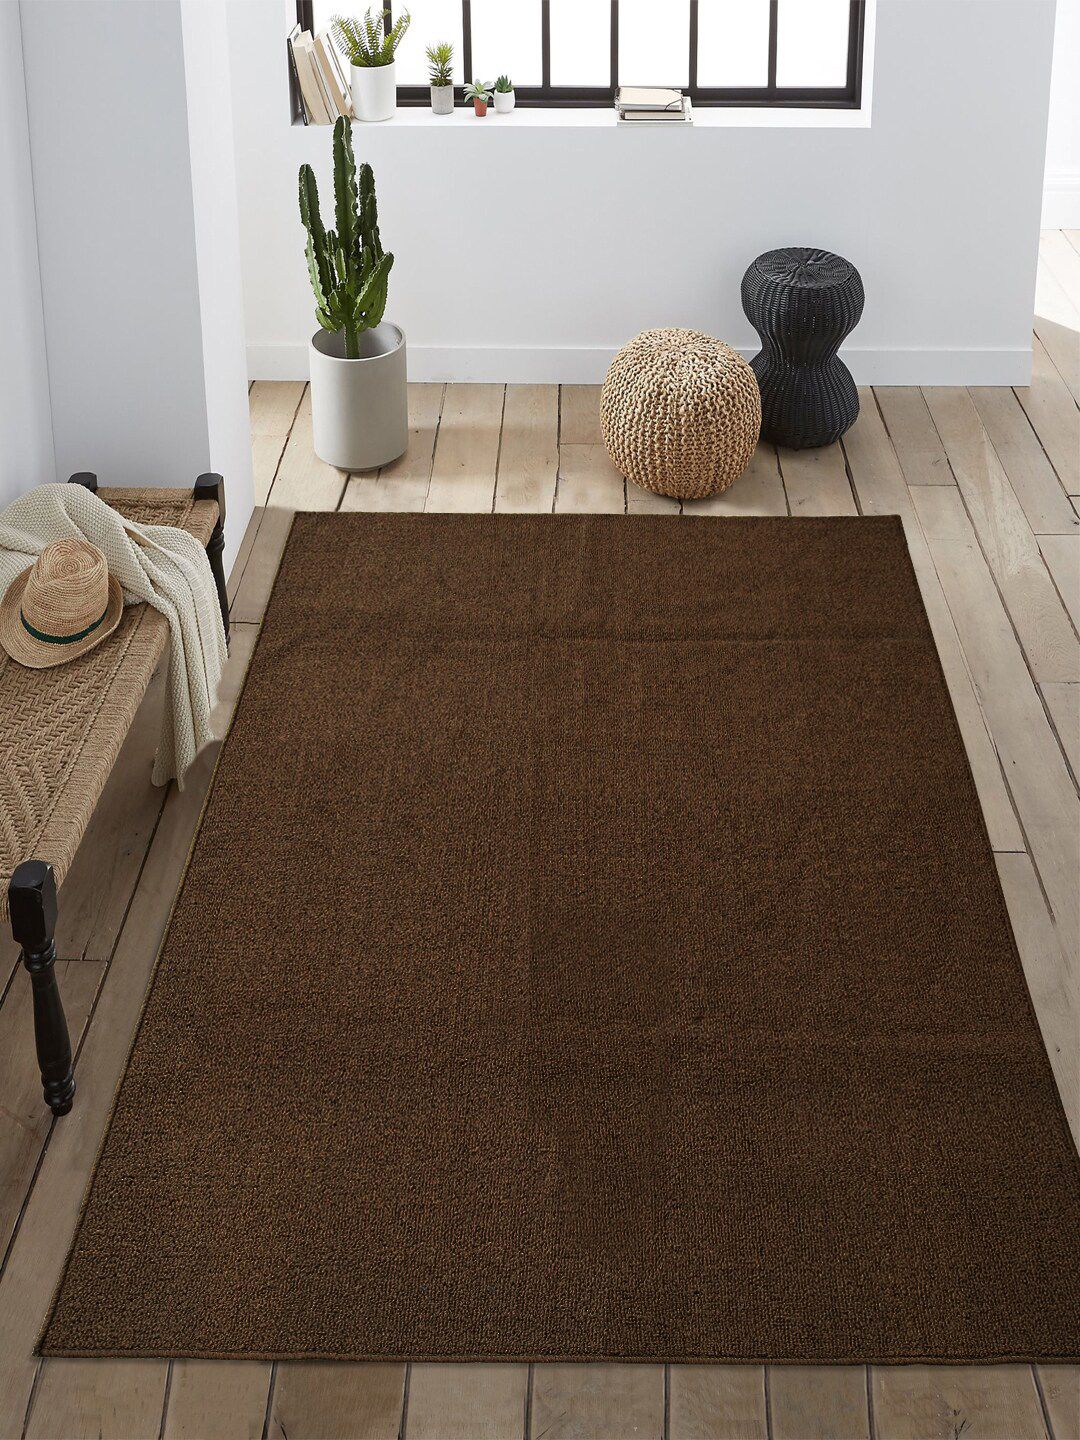 Saral Home Brown Solid Anti-Skid Carpet Price in India